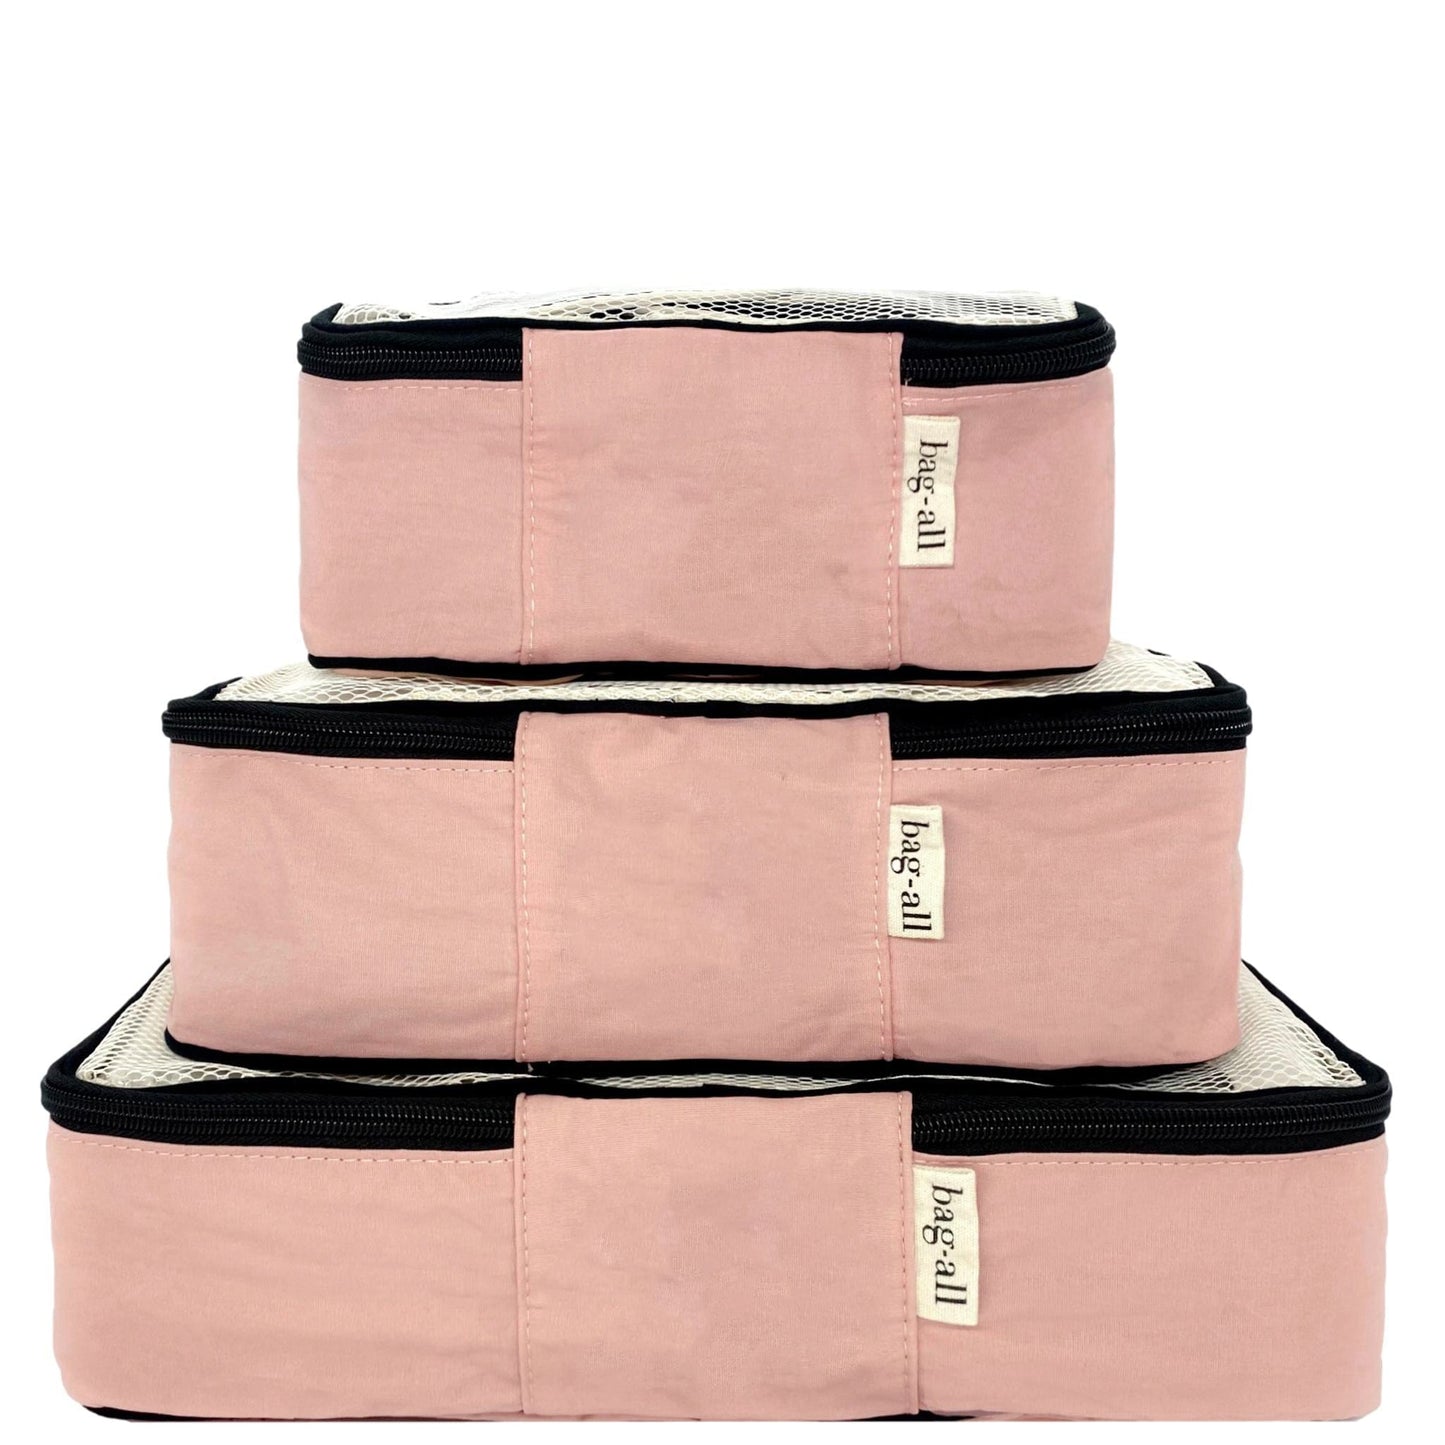 
                                      
                                        Cutest 3 Sizes Cotton Packing Cubes, Travel Organizing Set Pink/Blush - Bag-all Europe
                                      
                                    